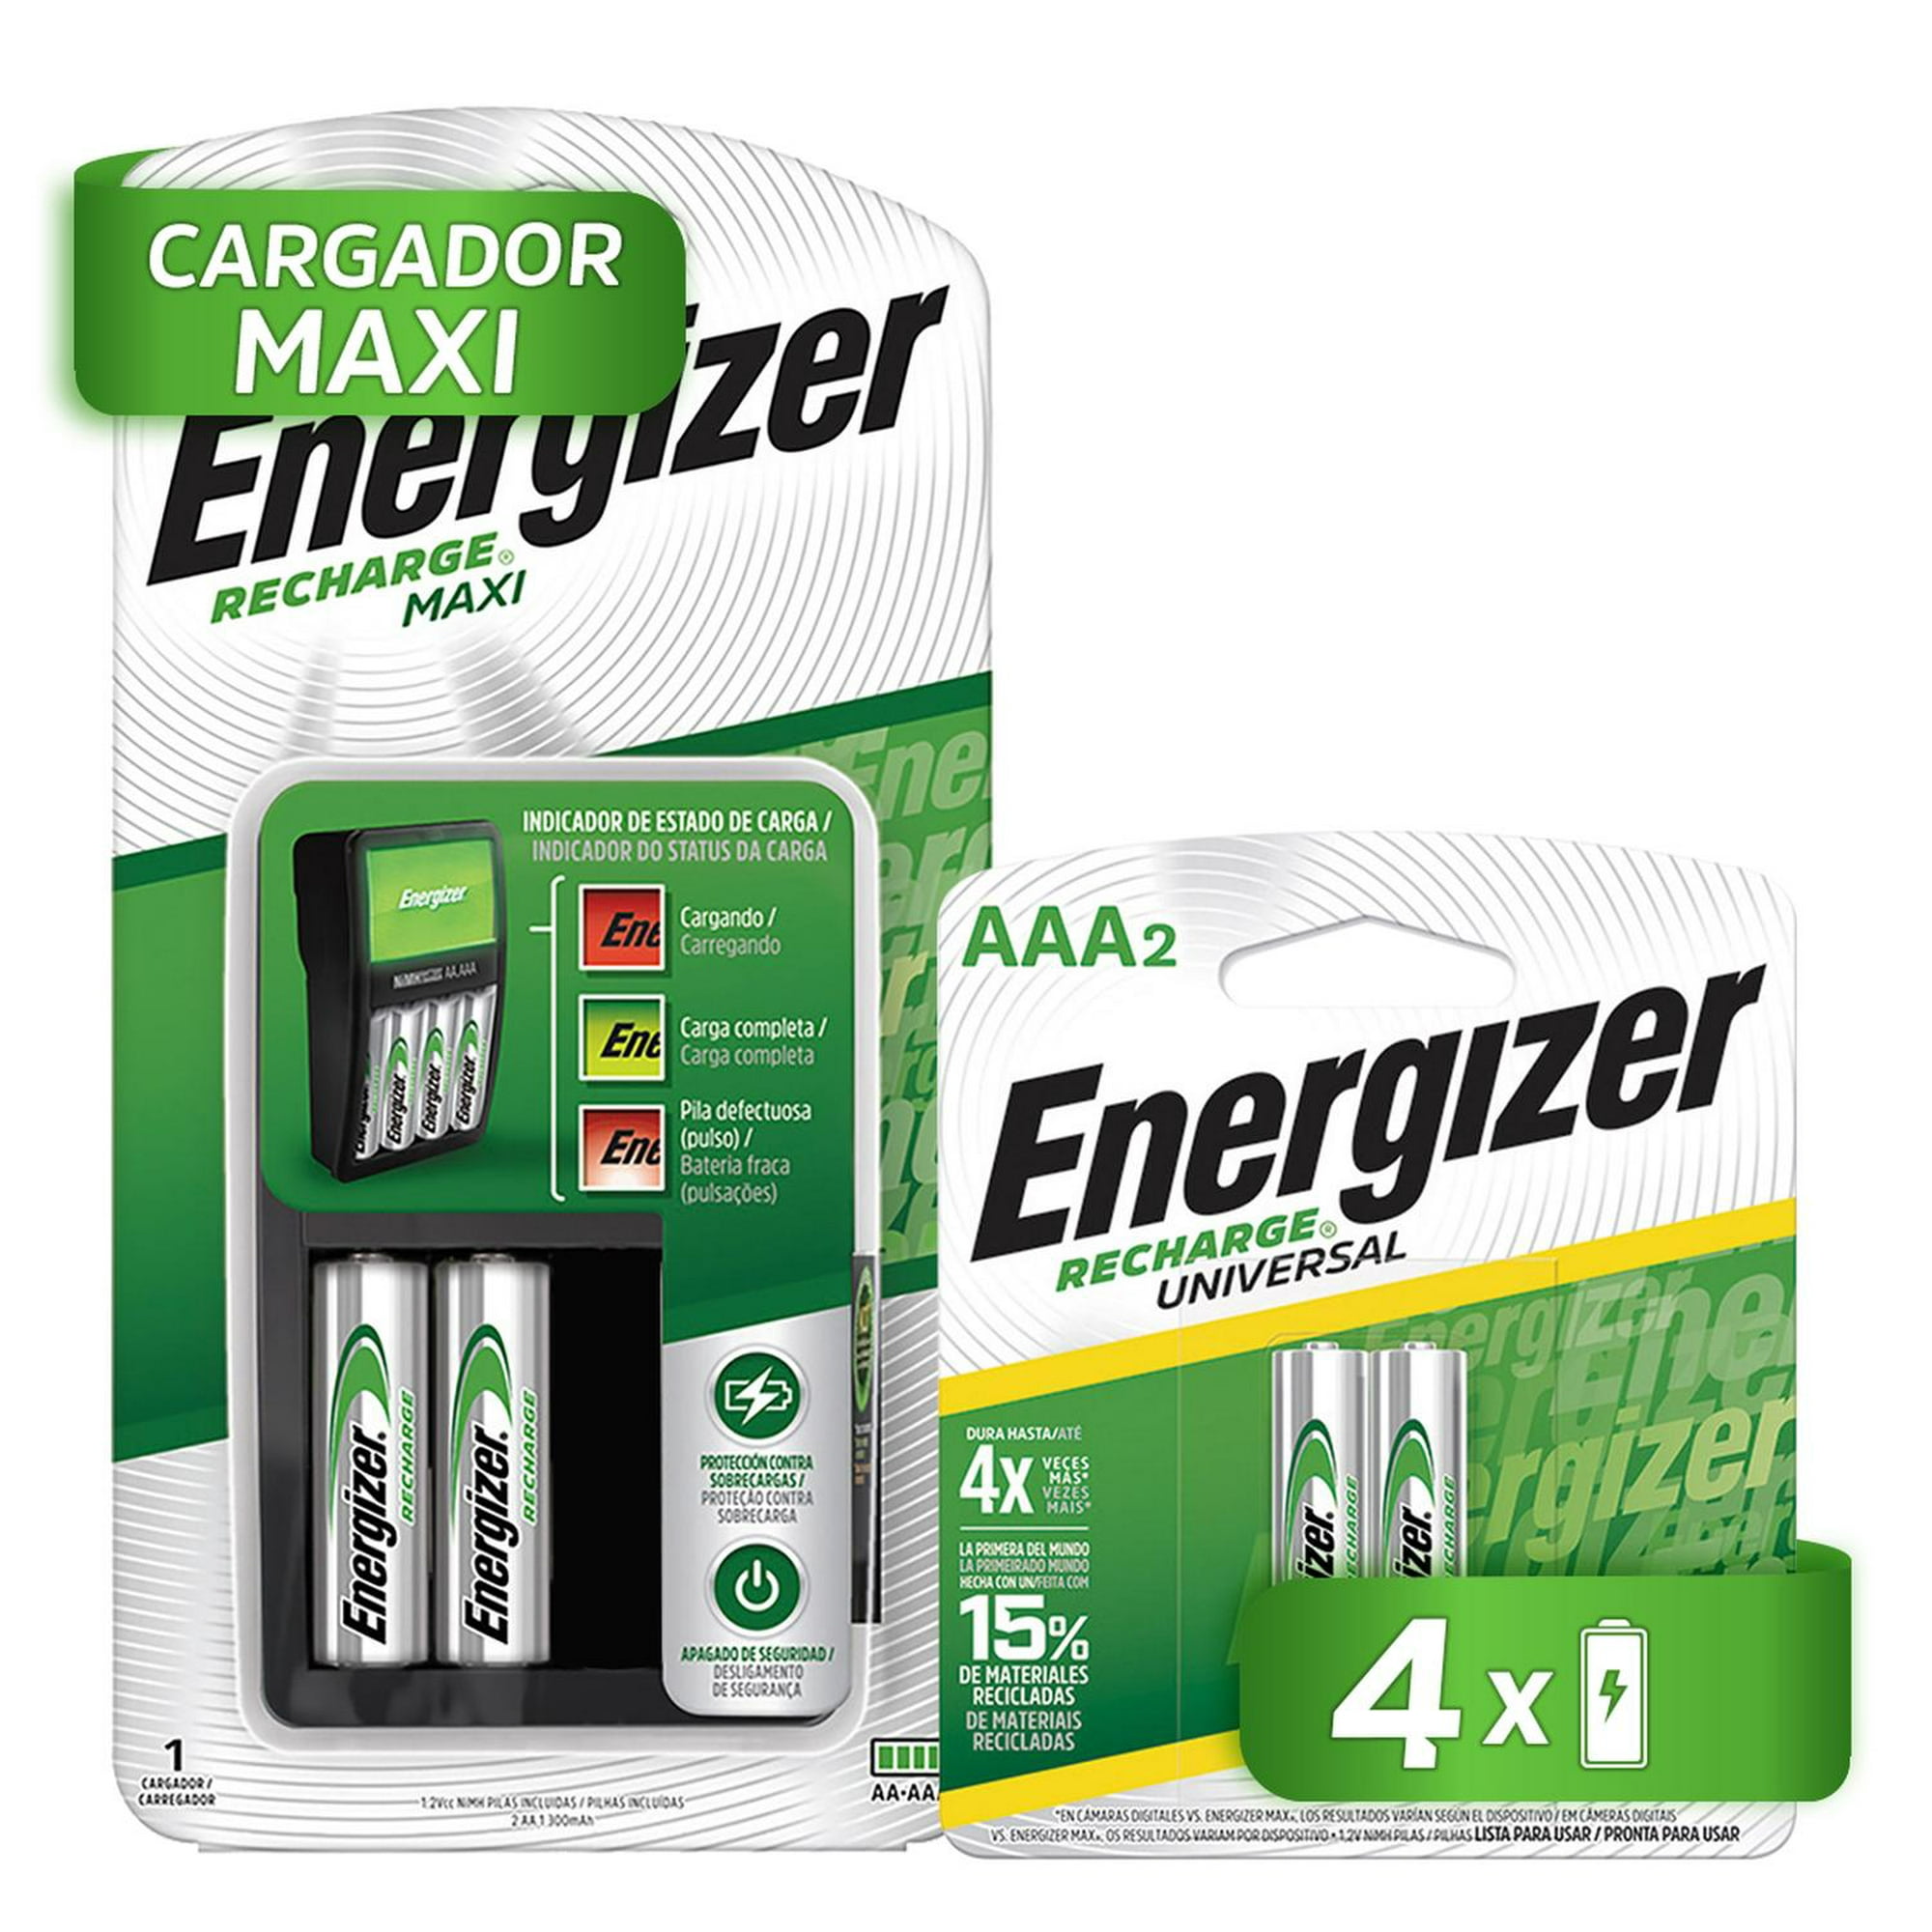 Cargador de pilas energizer maxi + 2 pilas aaa recargables energizer ecom8